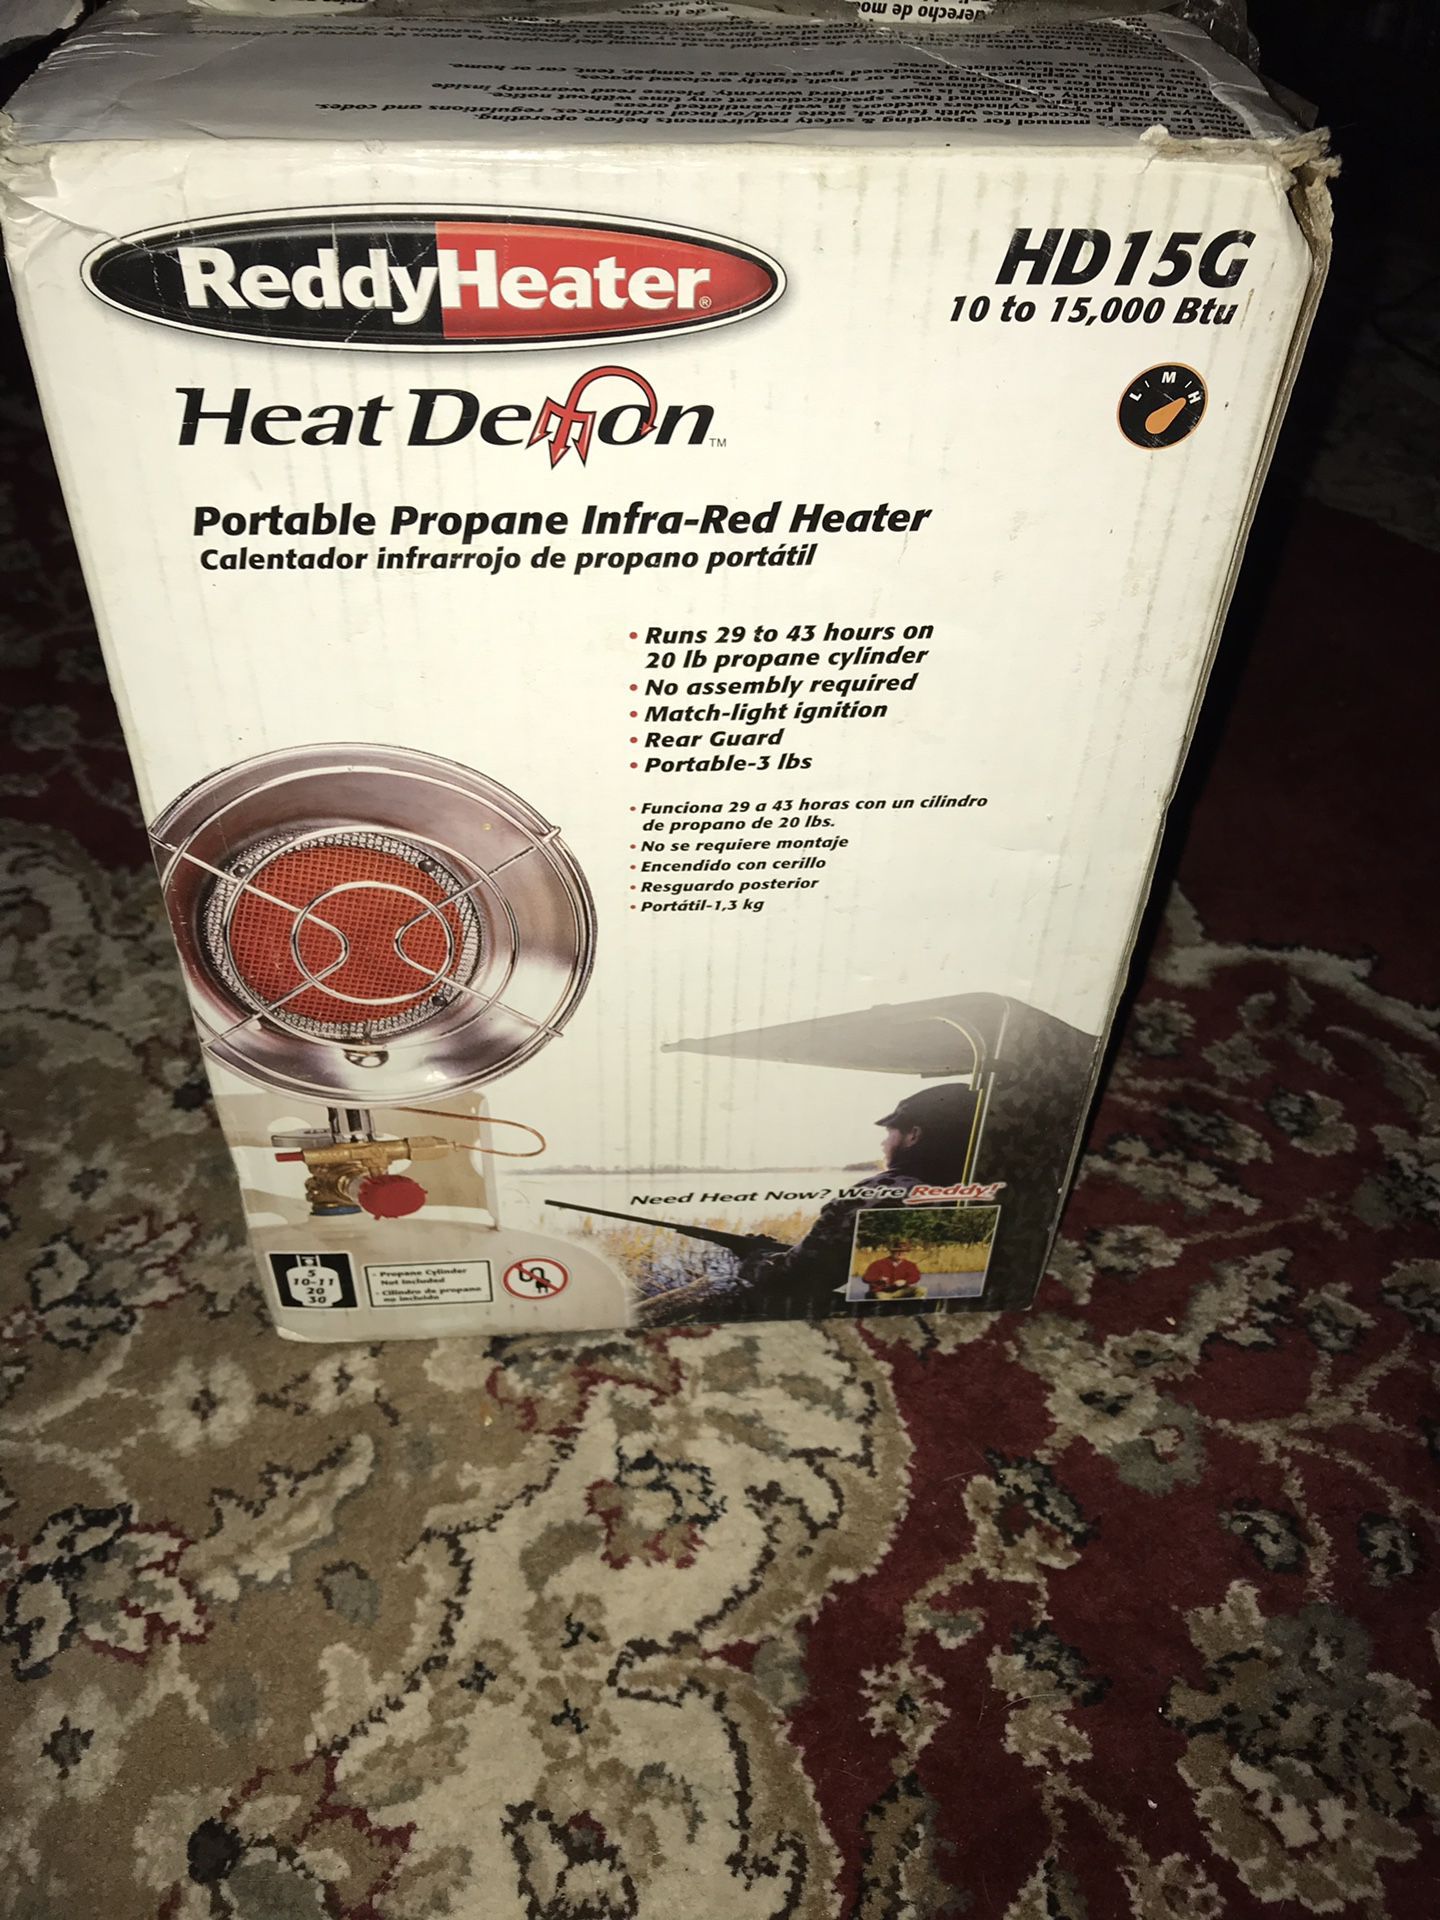 ReddyHeater portable propane infa-red heater